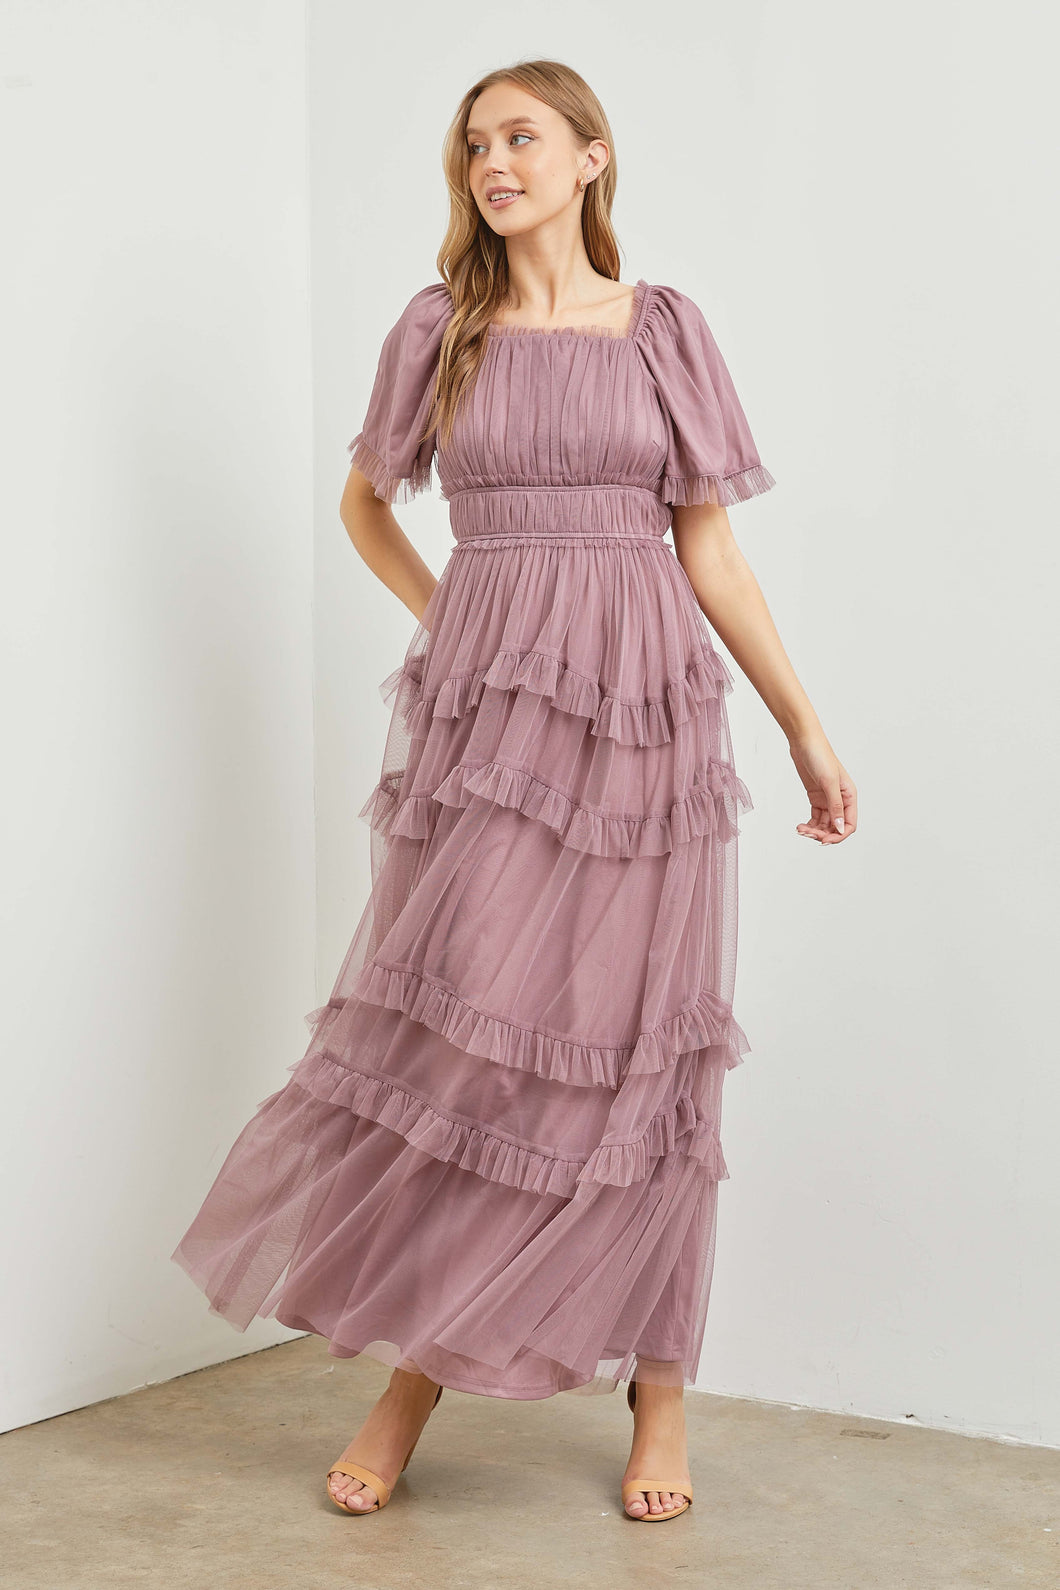 Polgram Tulle Maxi Dress in Dusty Lavender